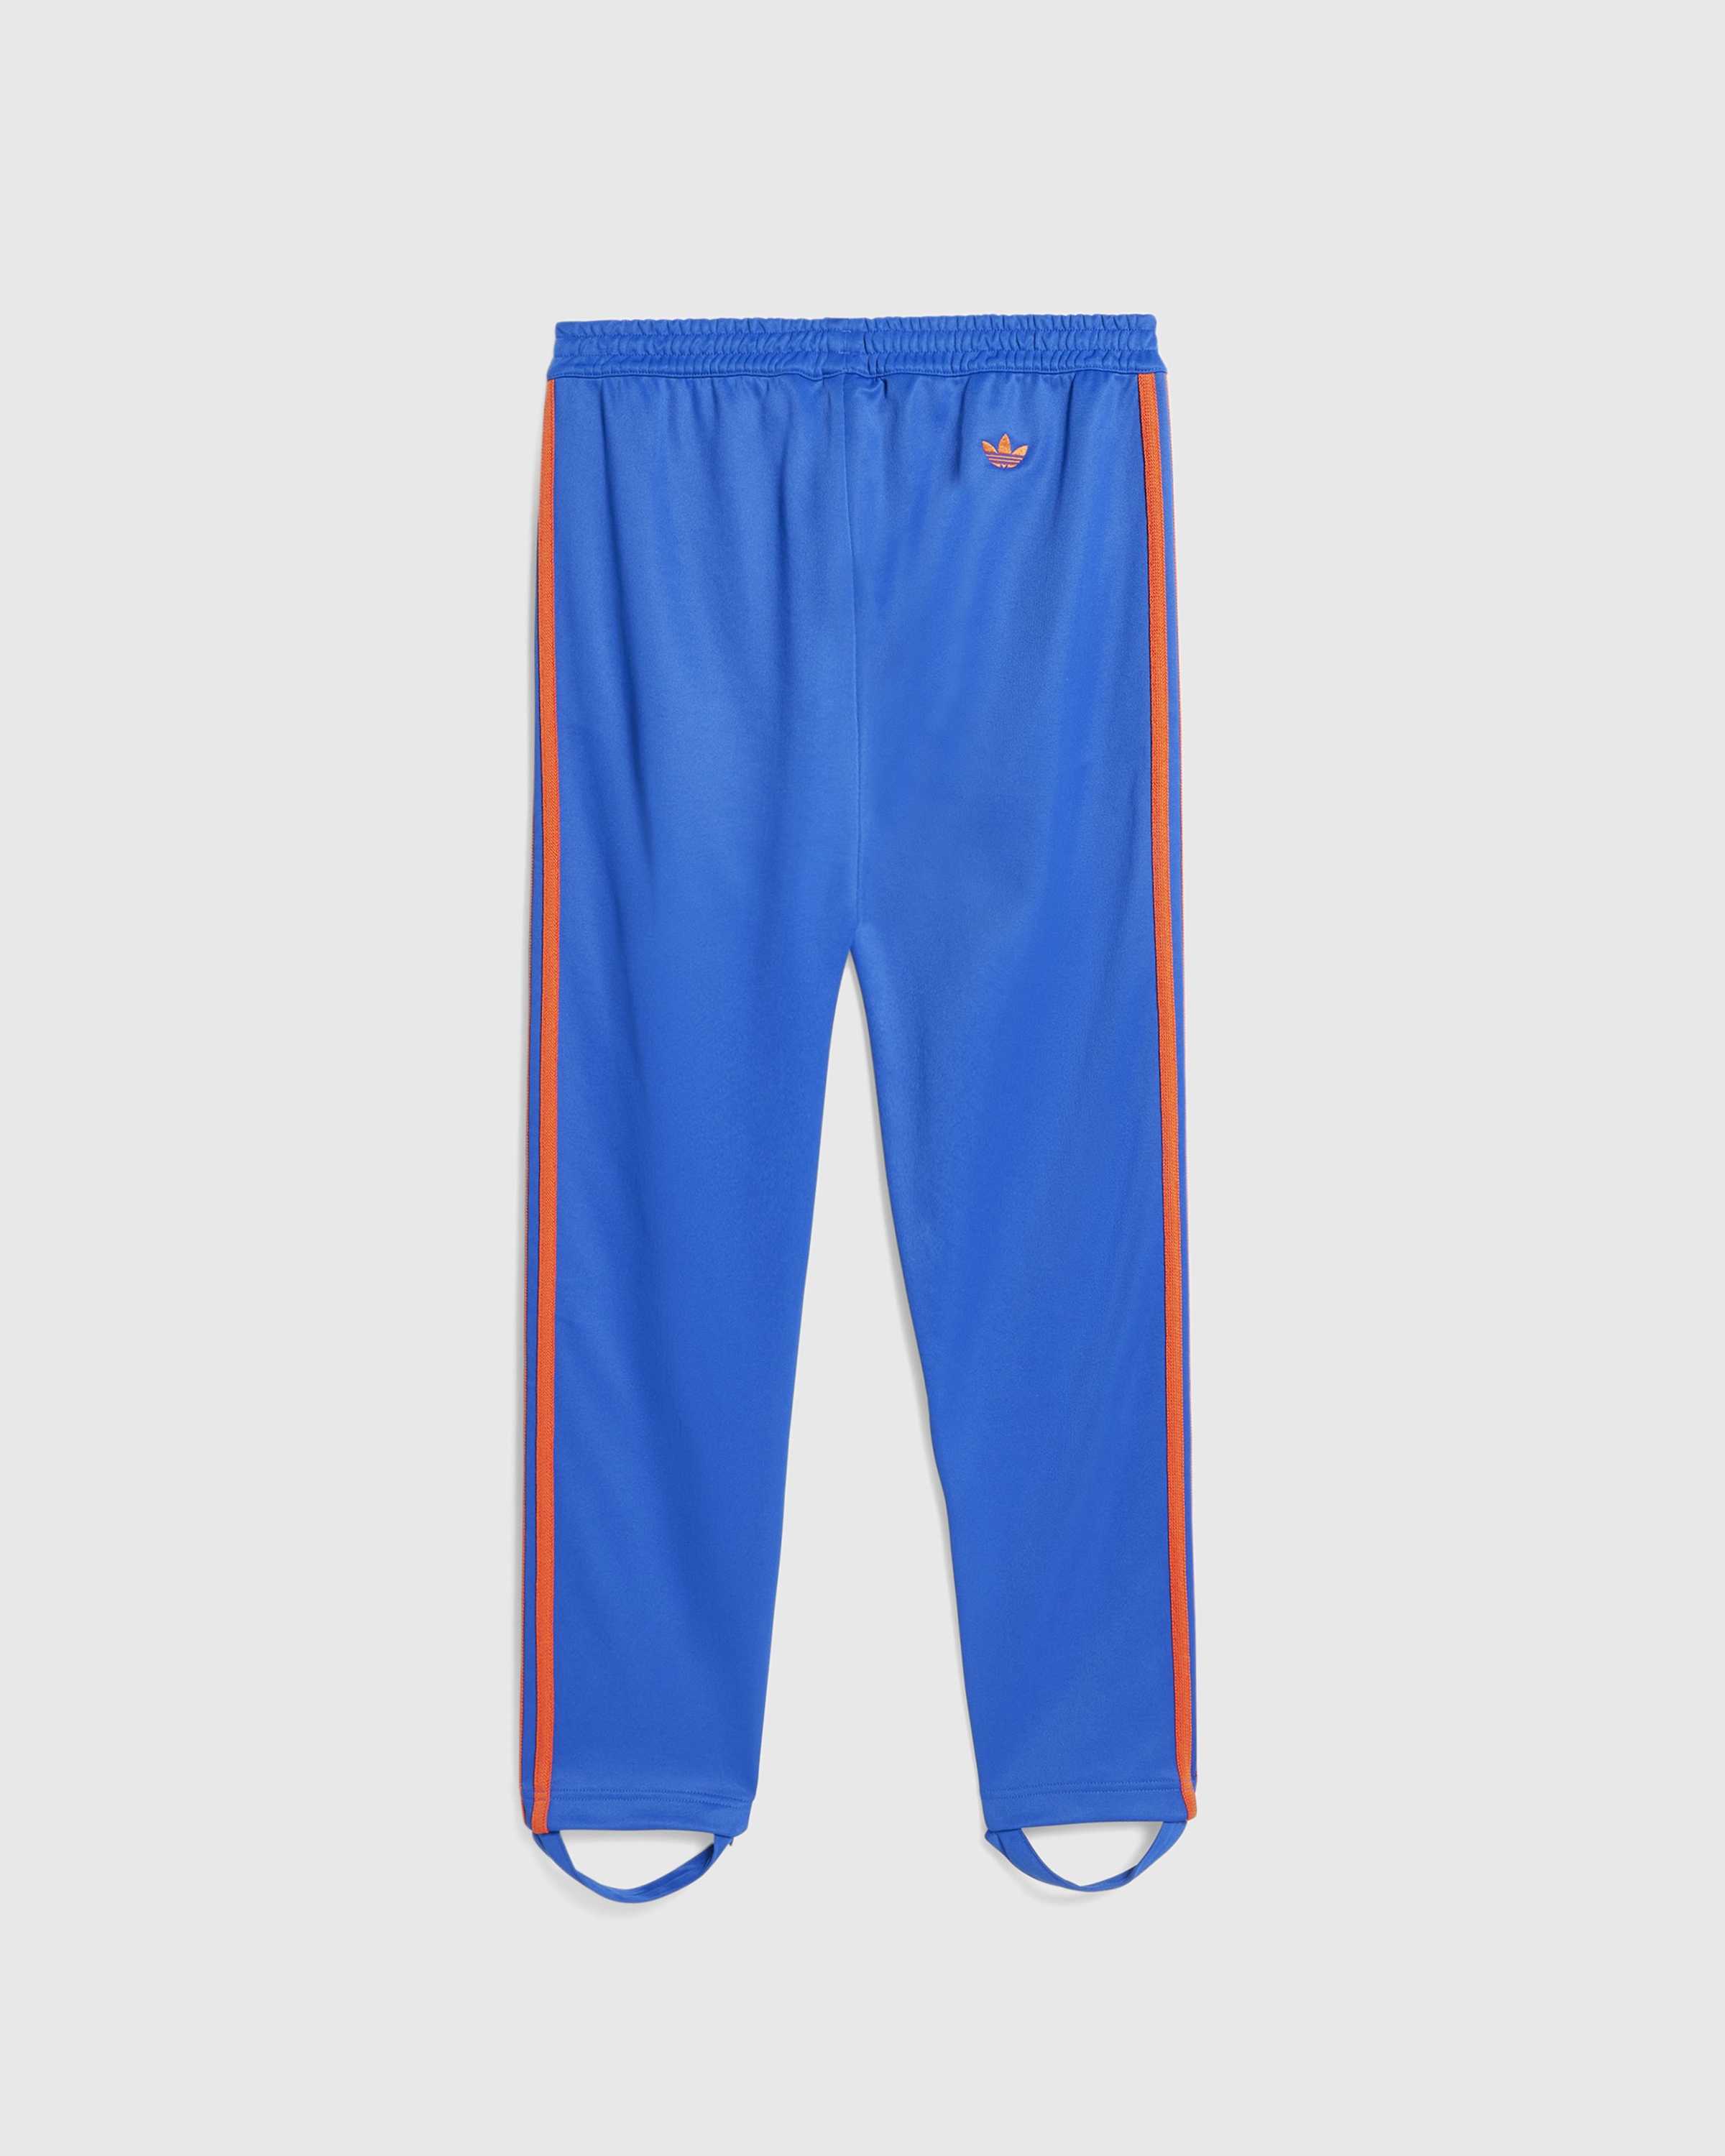 Adidas x Wales Bonner – Stirrup Pants Team Royal Blue - Track Pants - Blue - Image 4